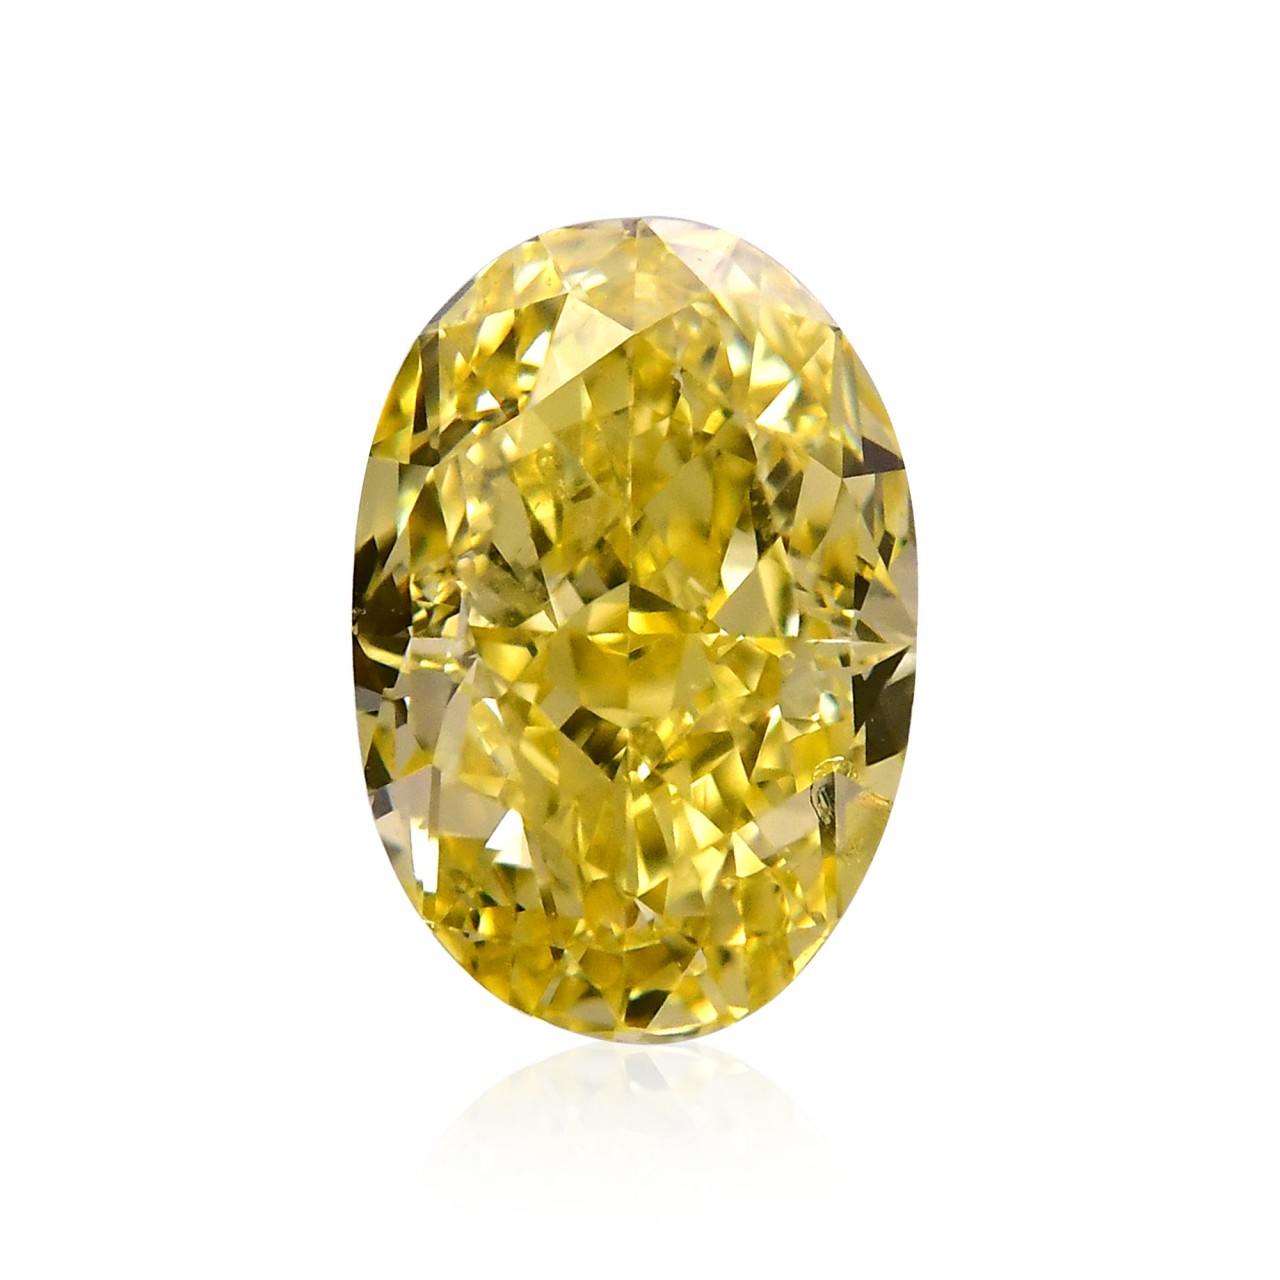 1.03 carat, Fancy Intense Yellow Diamond, Oval Shape, IF Clarity